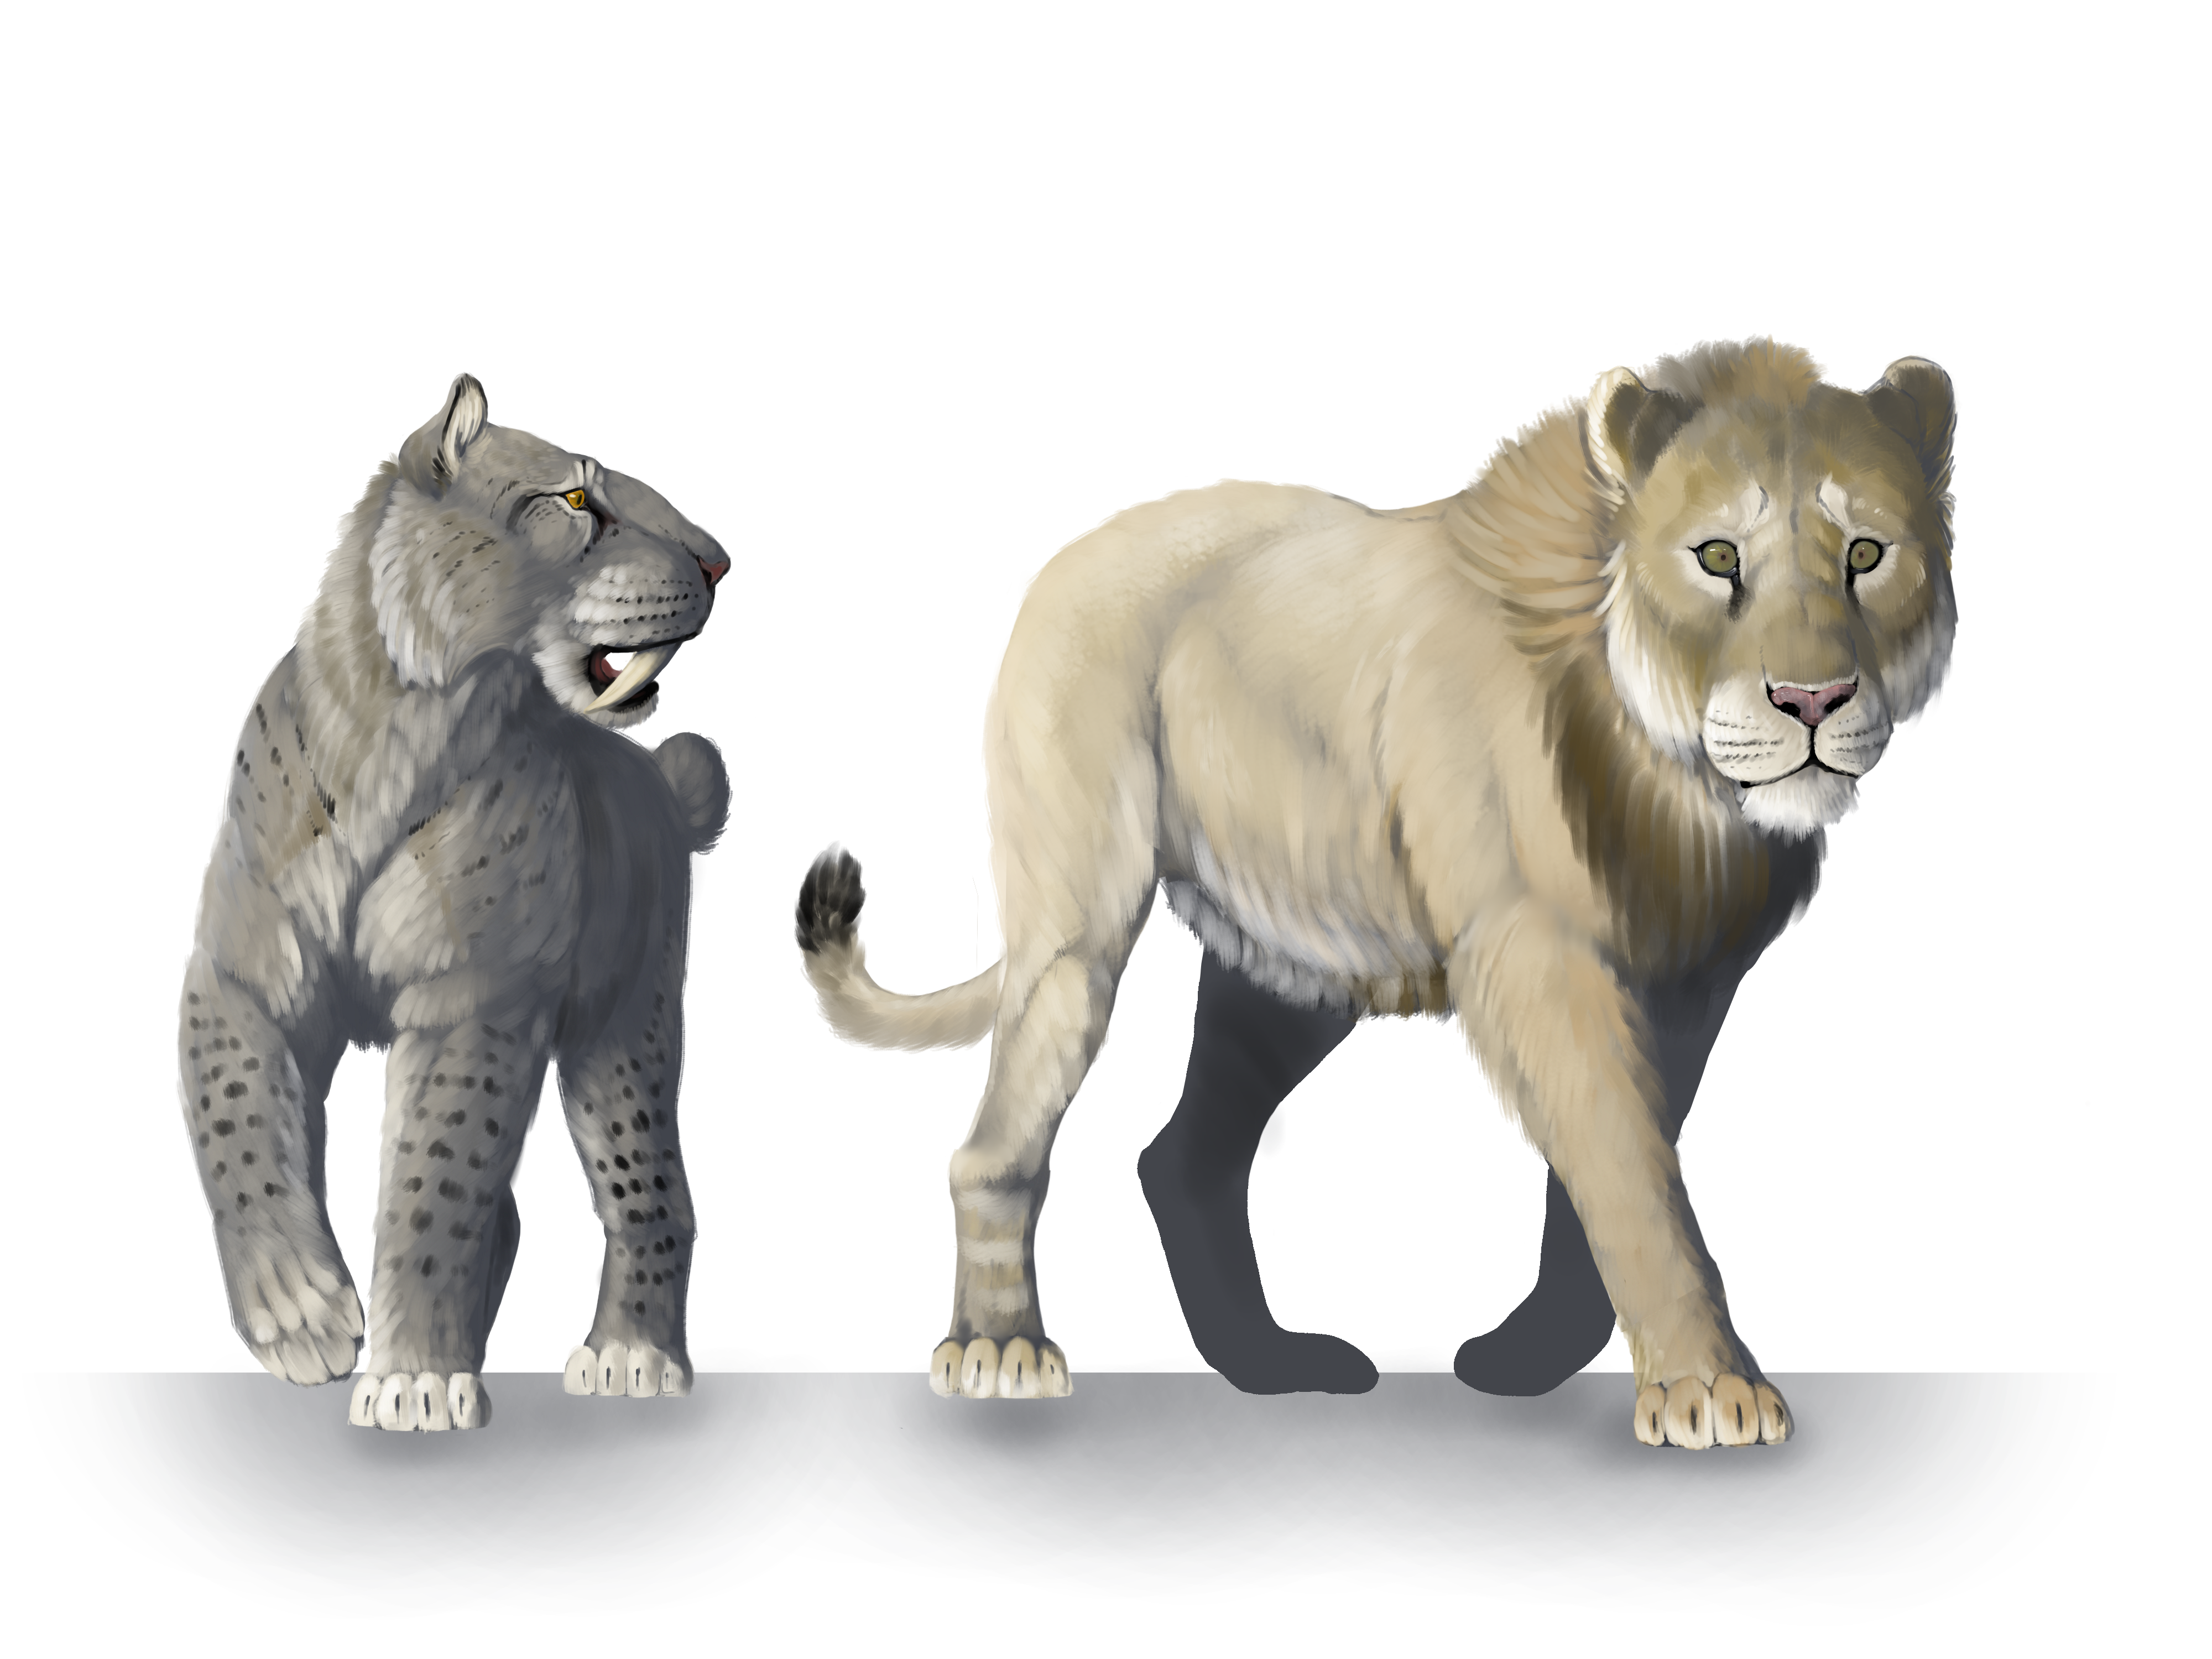 prehistoric predators american lion